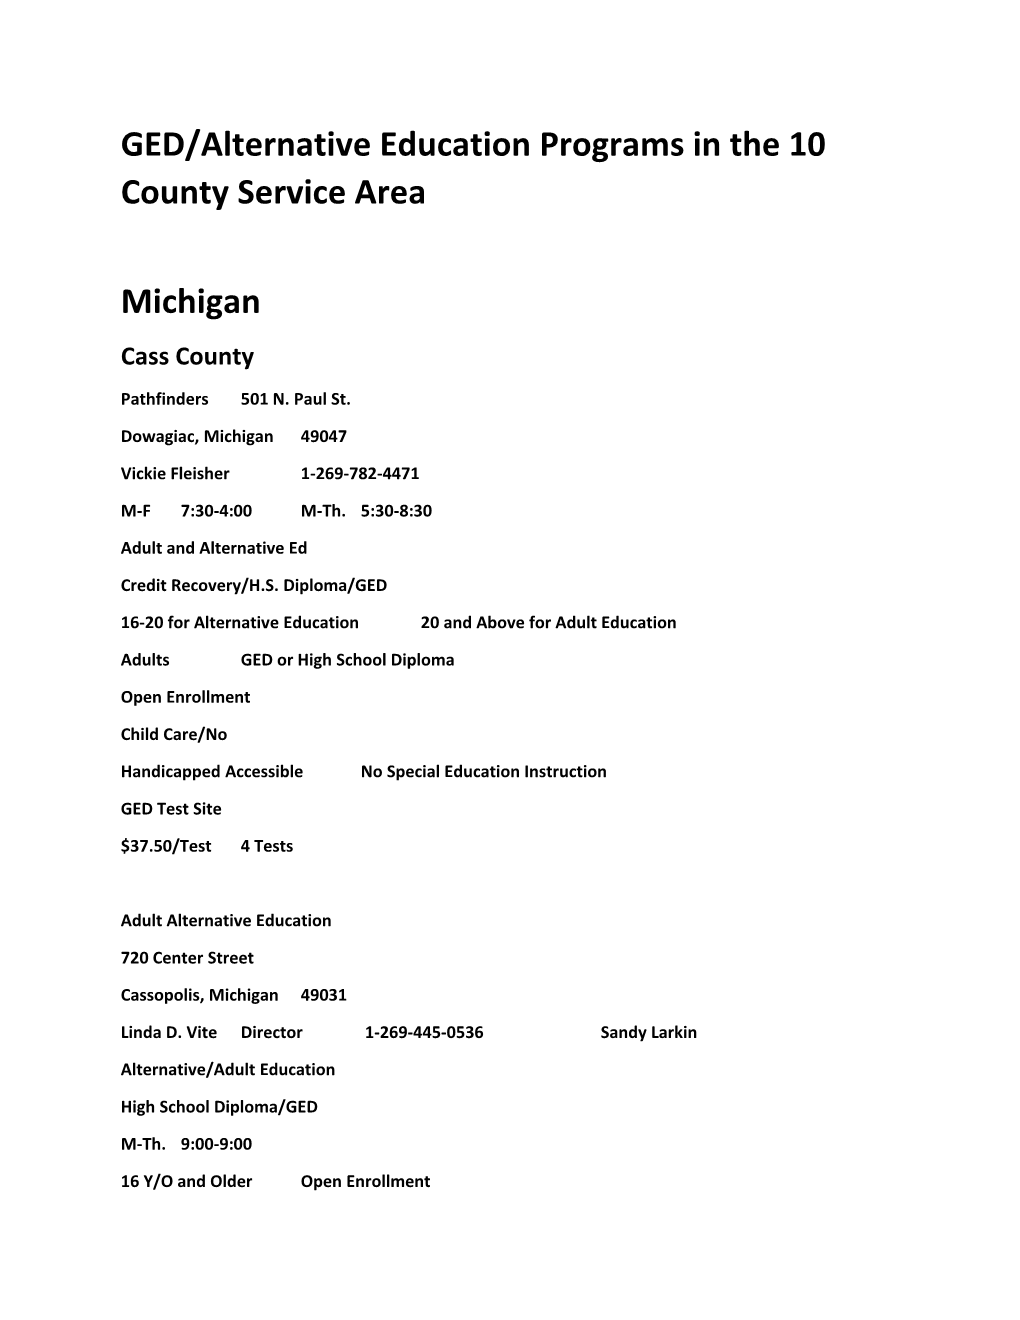 GED/Alternative Education Programs Inthe 10 County Service Area